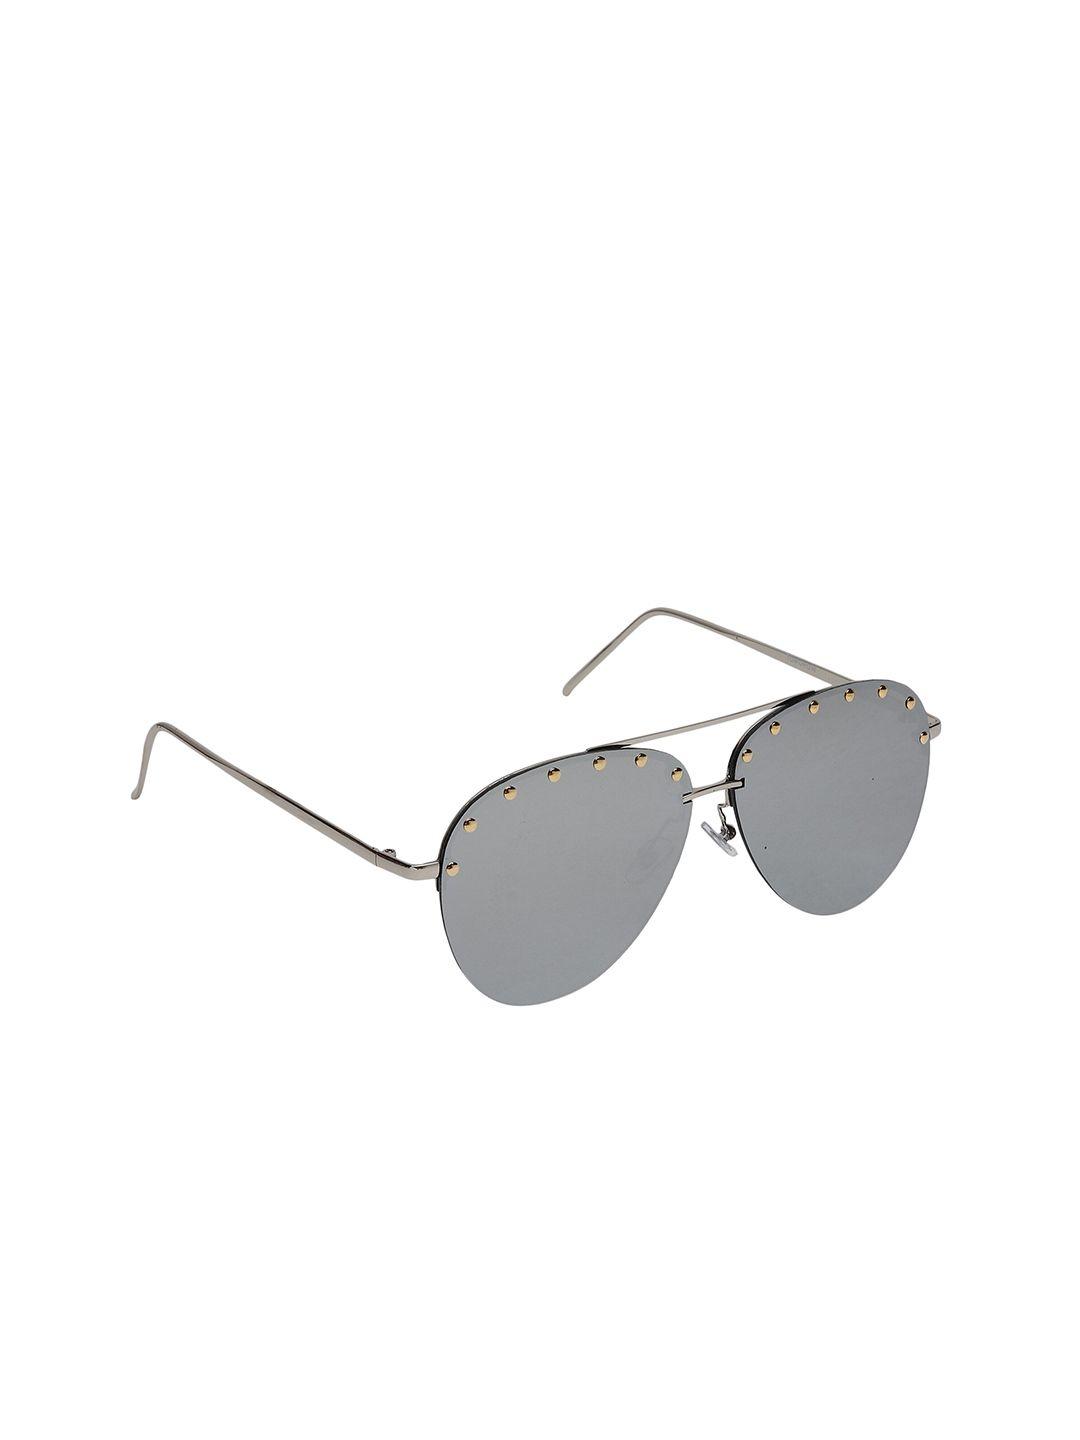 celebrity-sunglasses-unisex-grey-aviator-sunglasses-cl-tom-smith-10